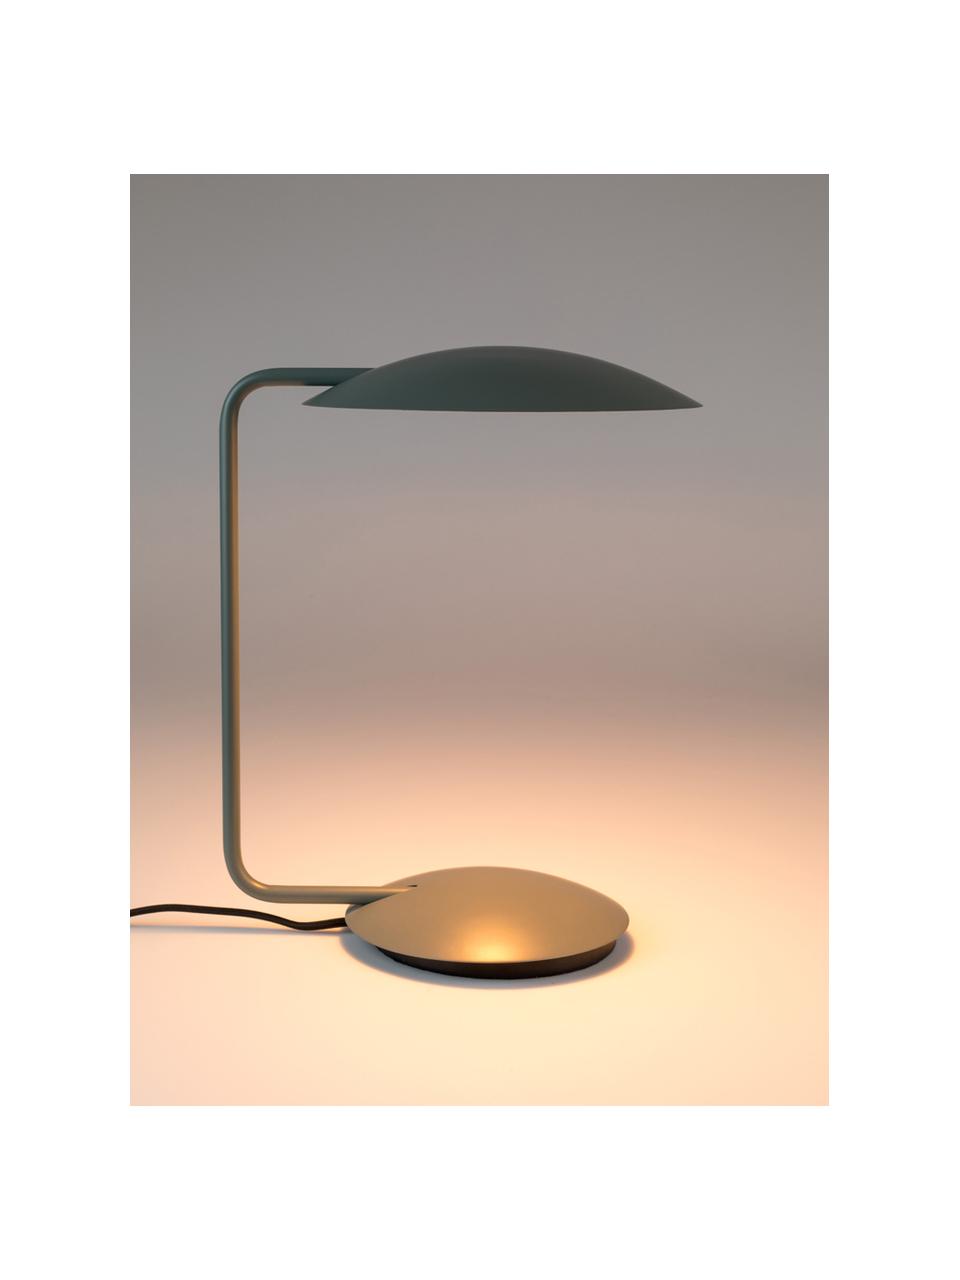 Tischlampe Pixie in Grau, Lampenschirm: Metall, pulverbeschichtet, Lampenfuß: Metall, pulverbeschichtet, Grau, B 25 x H 39 cm